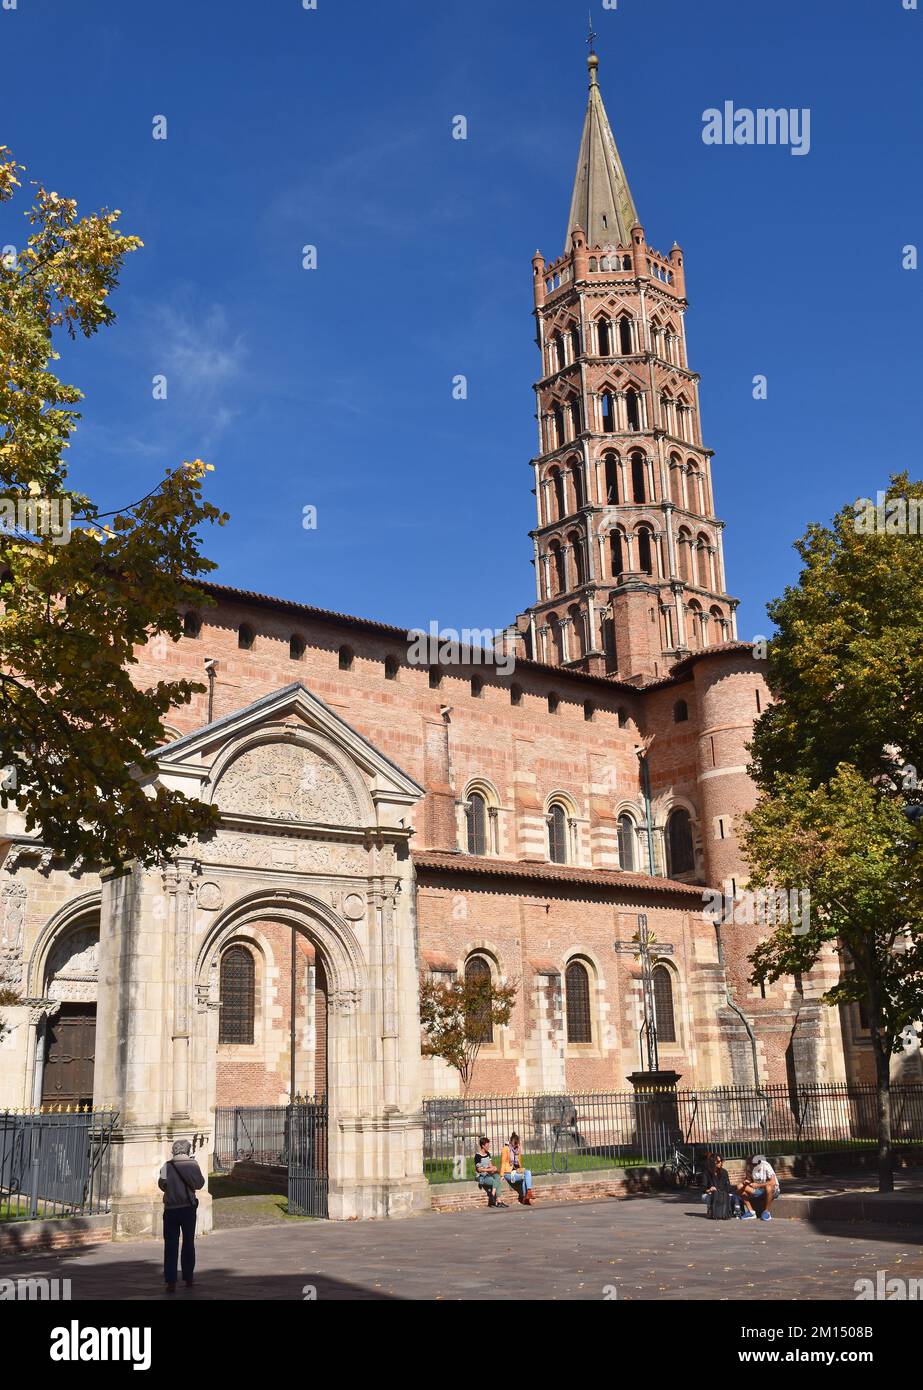 The Basilica church of St Sernin, Toulouse, largest Romanesque building in Europe, of red brick, la ville rose, built c1180-1220 & Renaissance Gate Stock Photo